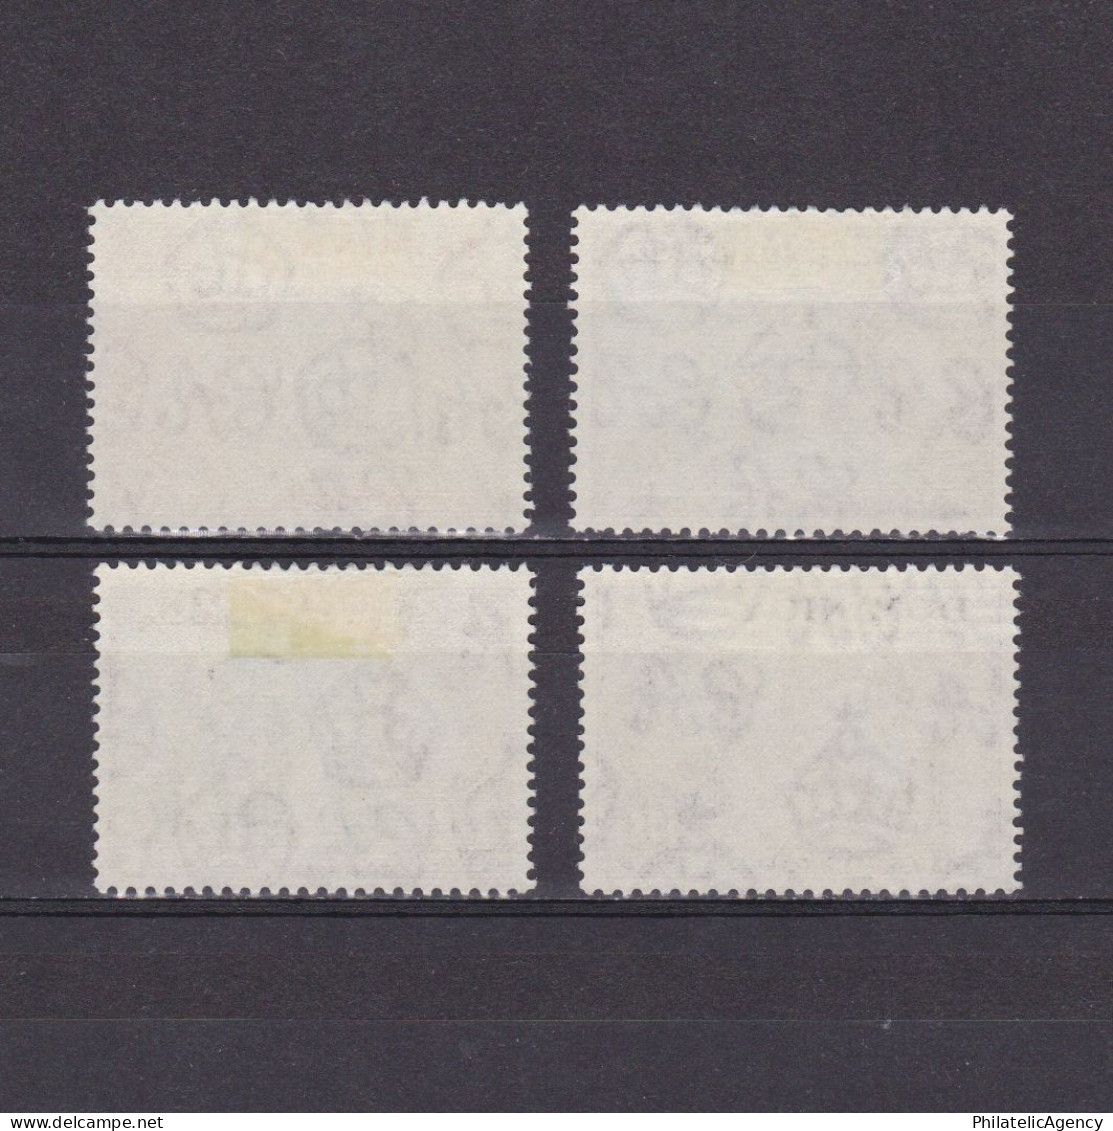 DOMINICA 1957, SG # 144-155, CV £39, Part Set, MH - Dominica (...-1978)